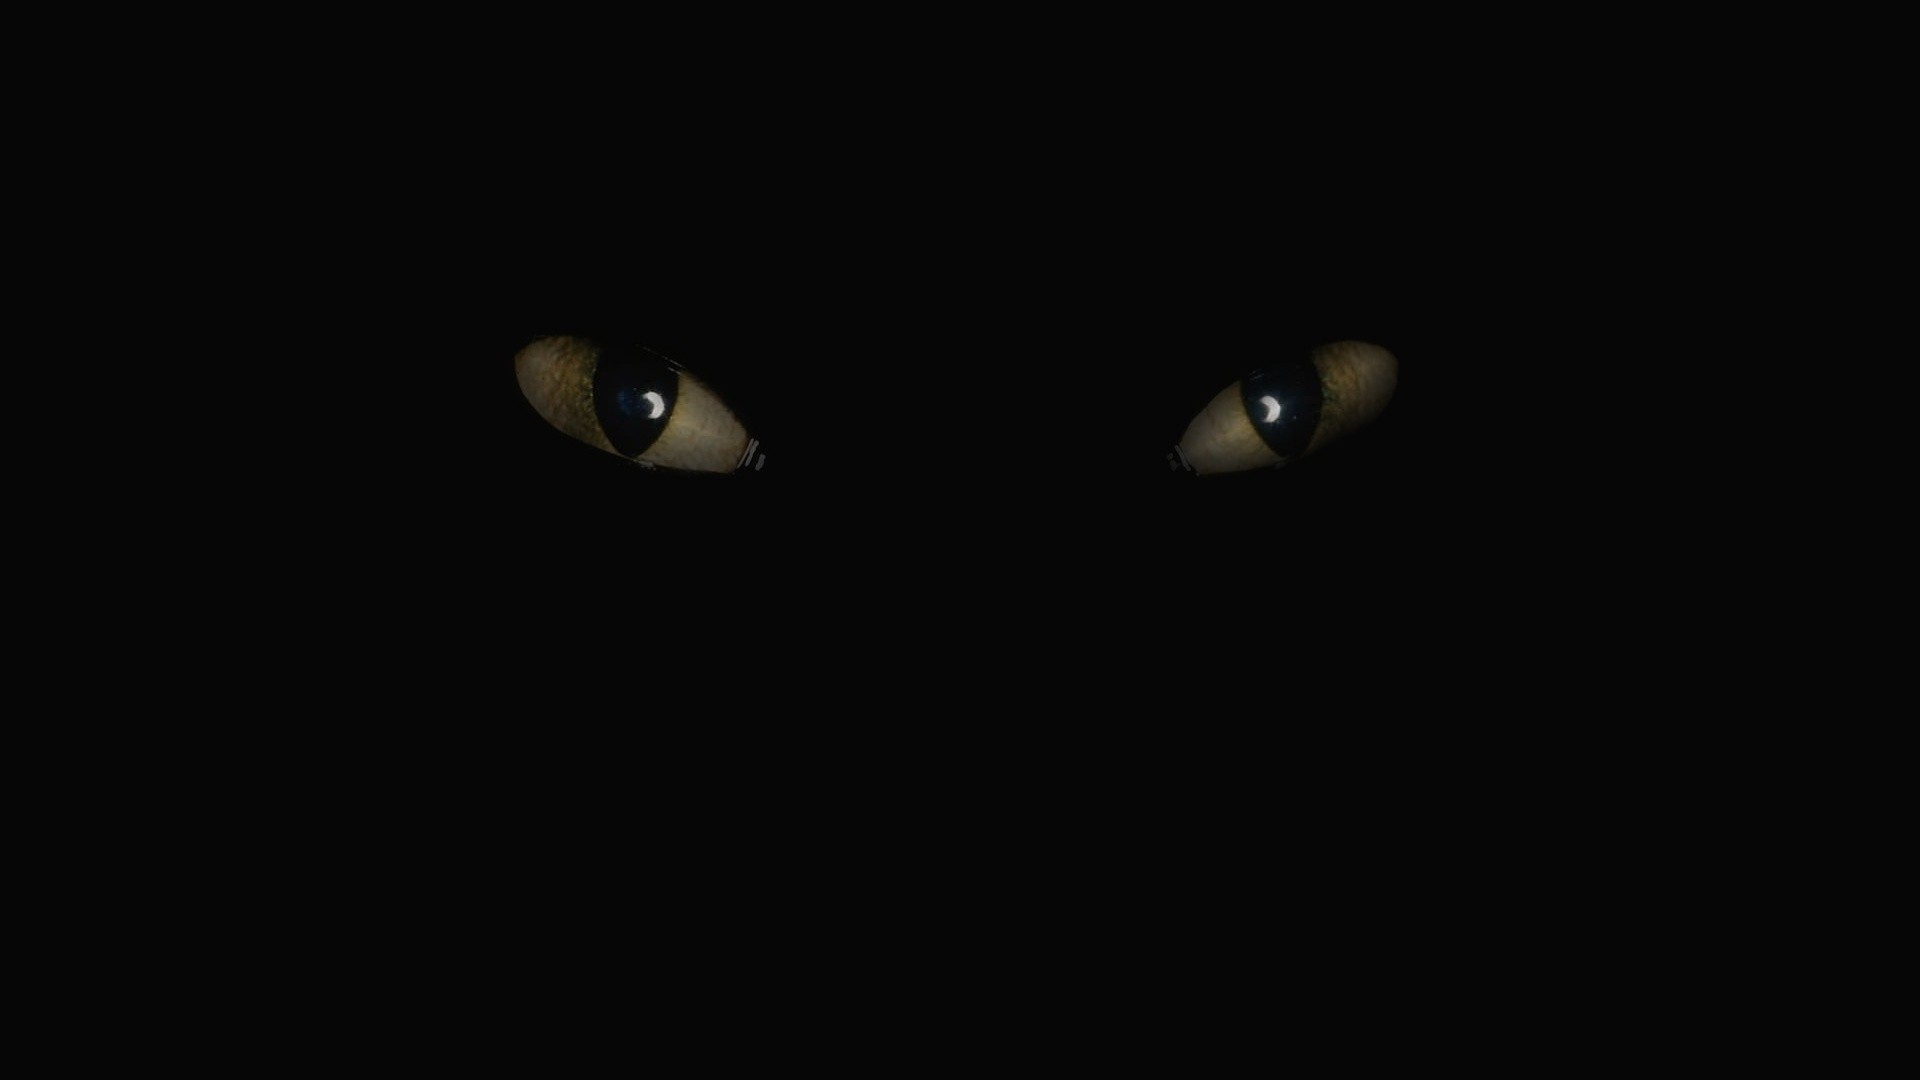 General 1920x1080 Toothless eyes minimalism digital art animal eyes simple background black background animals